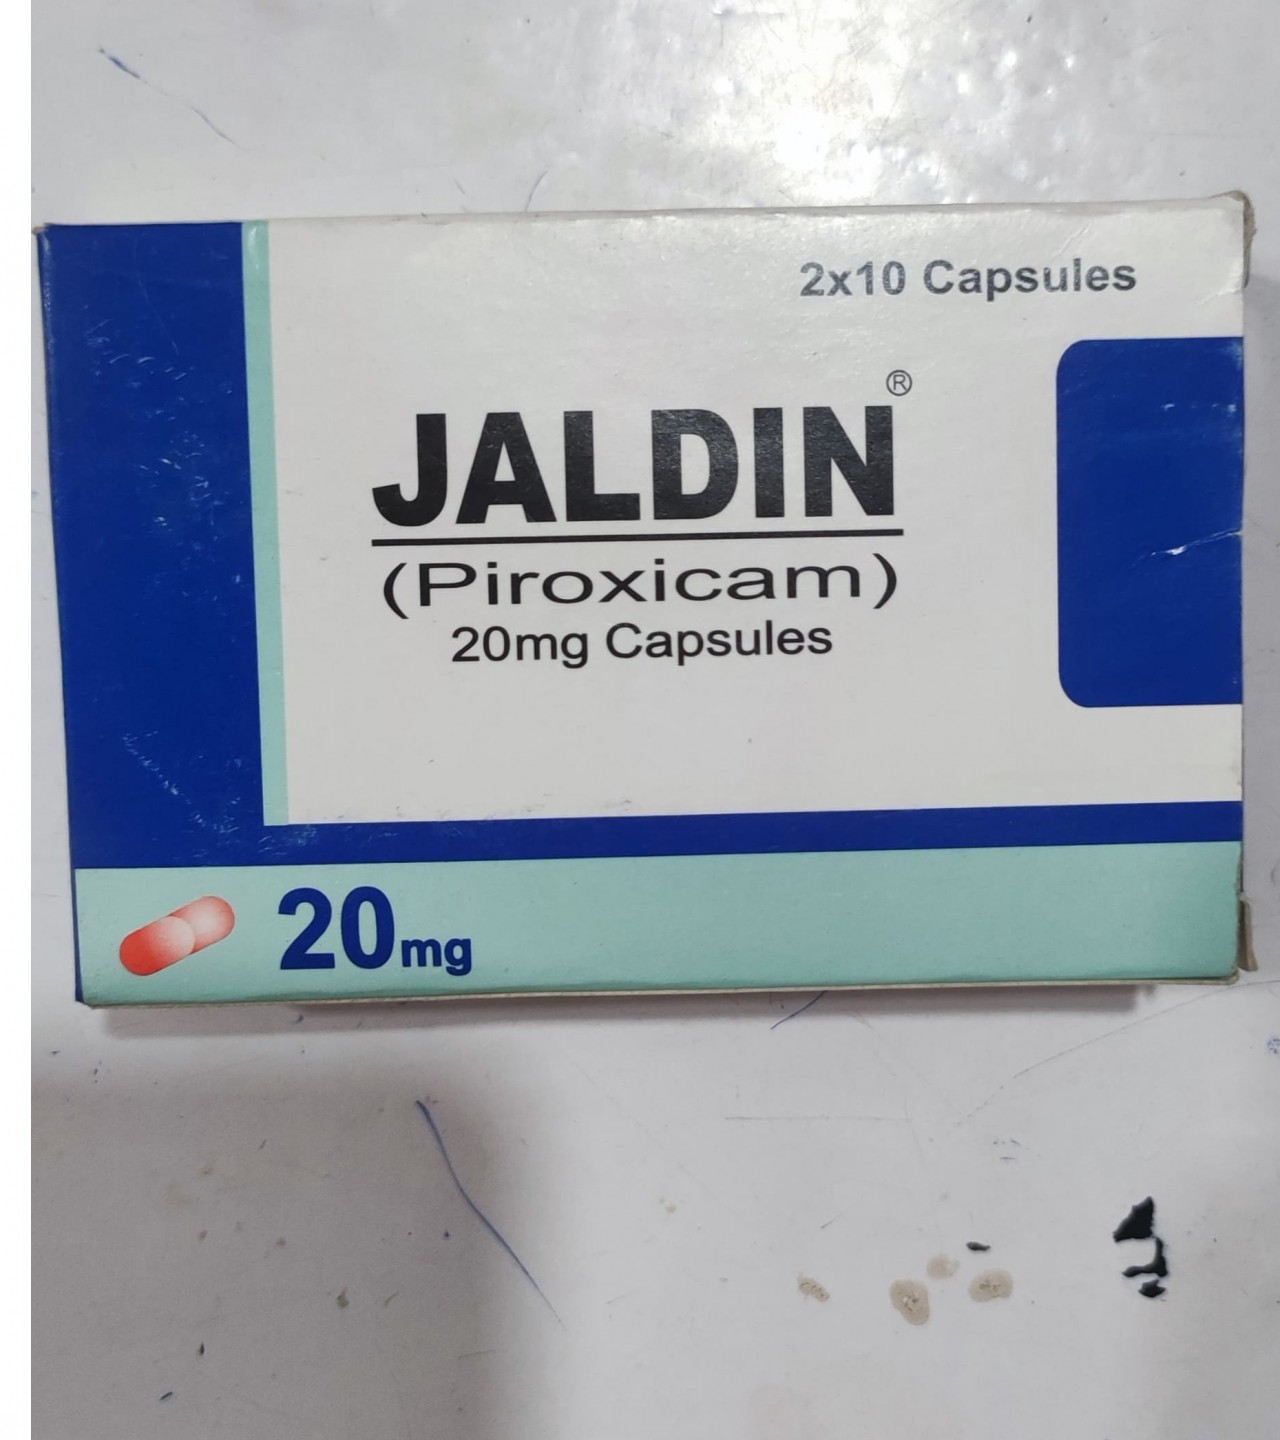 JALDIN CAPSULE 20MG ( PIROXICAM )